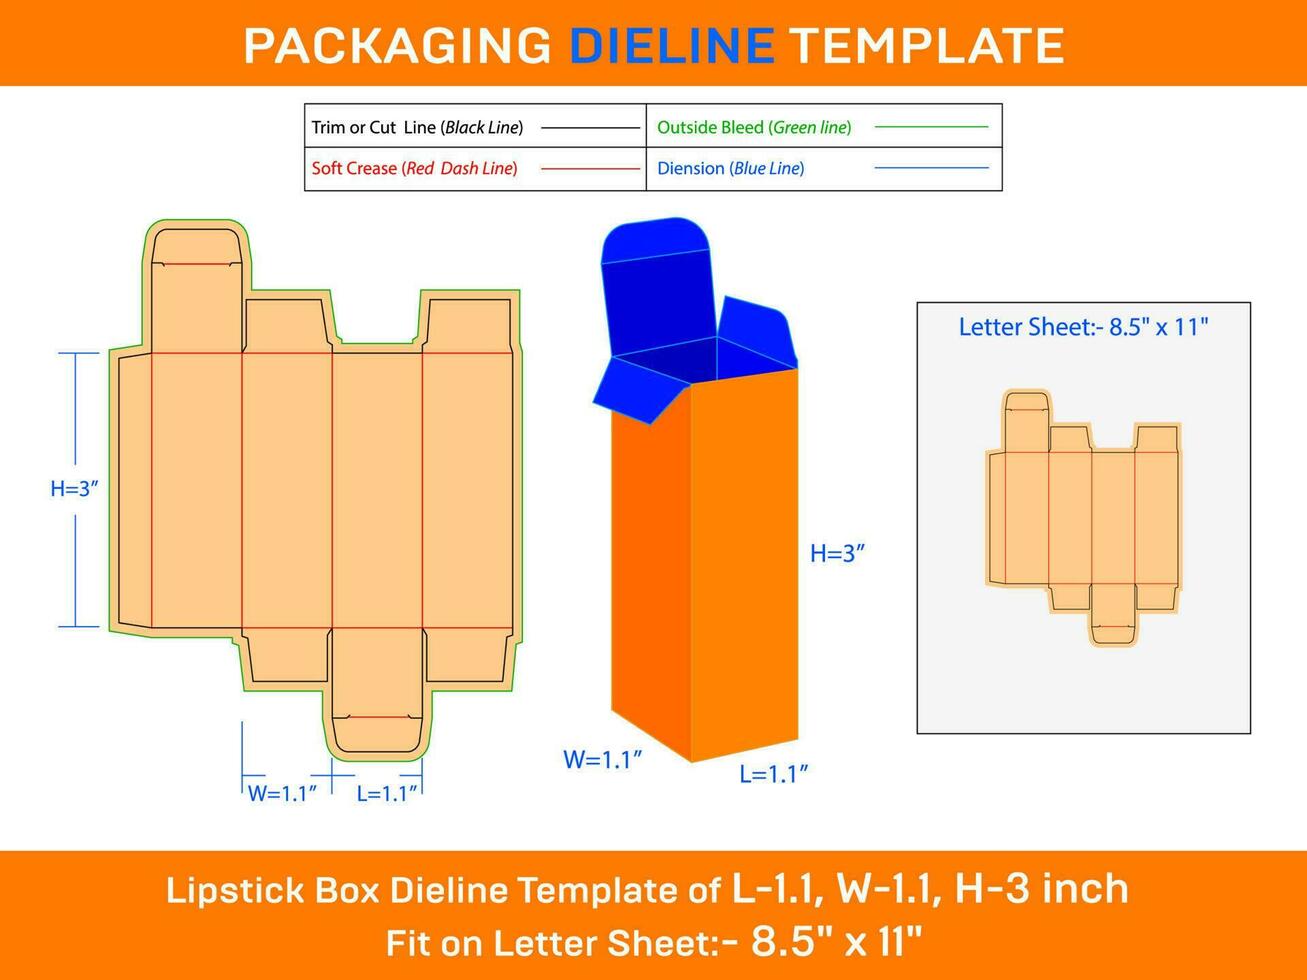 L 1.1xW 1.1xH 3 inch Rectangular Lipstick Box Deline Template 24552147 ...